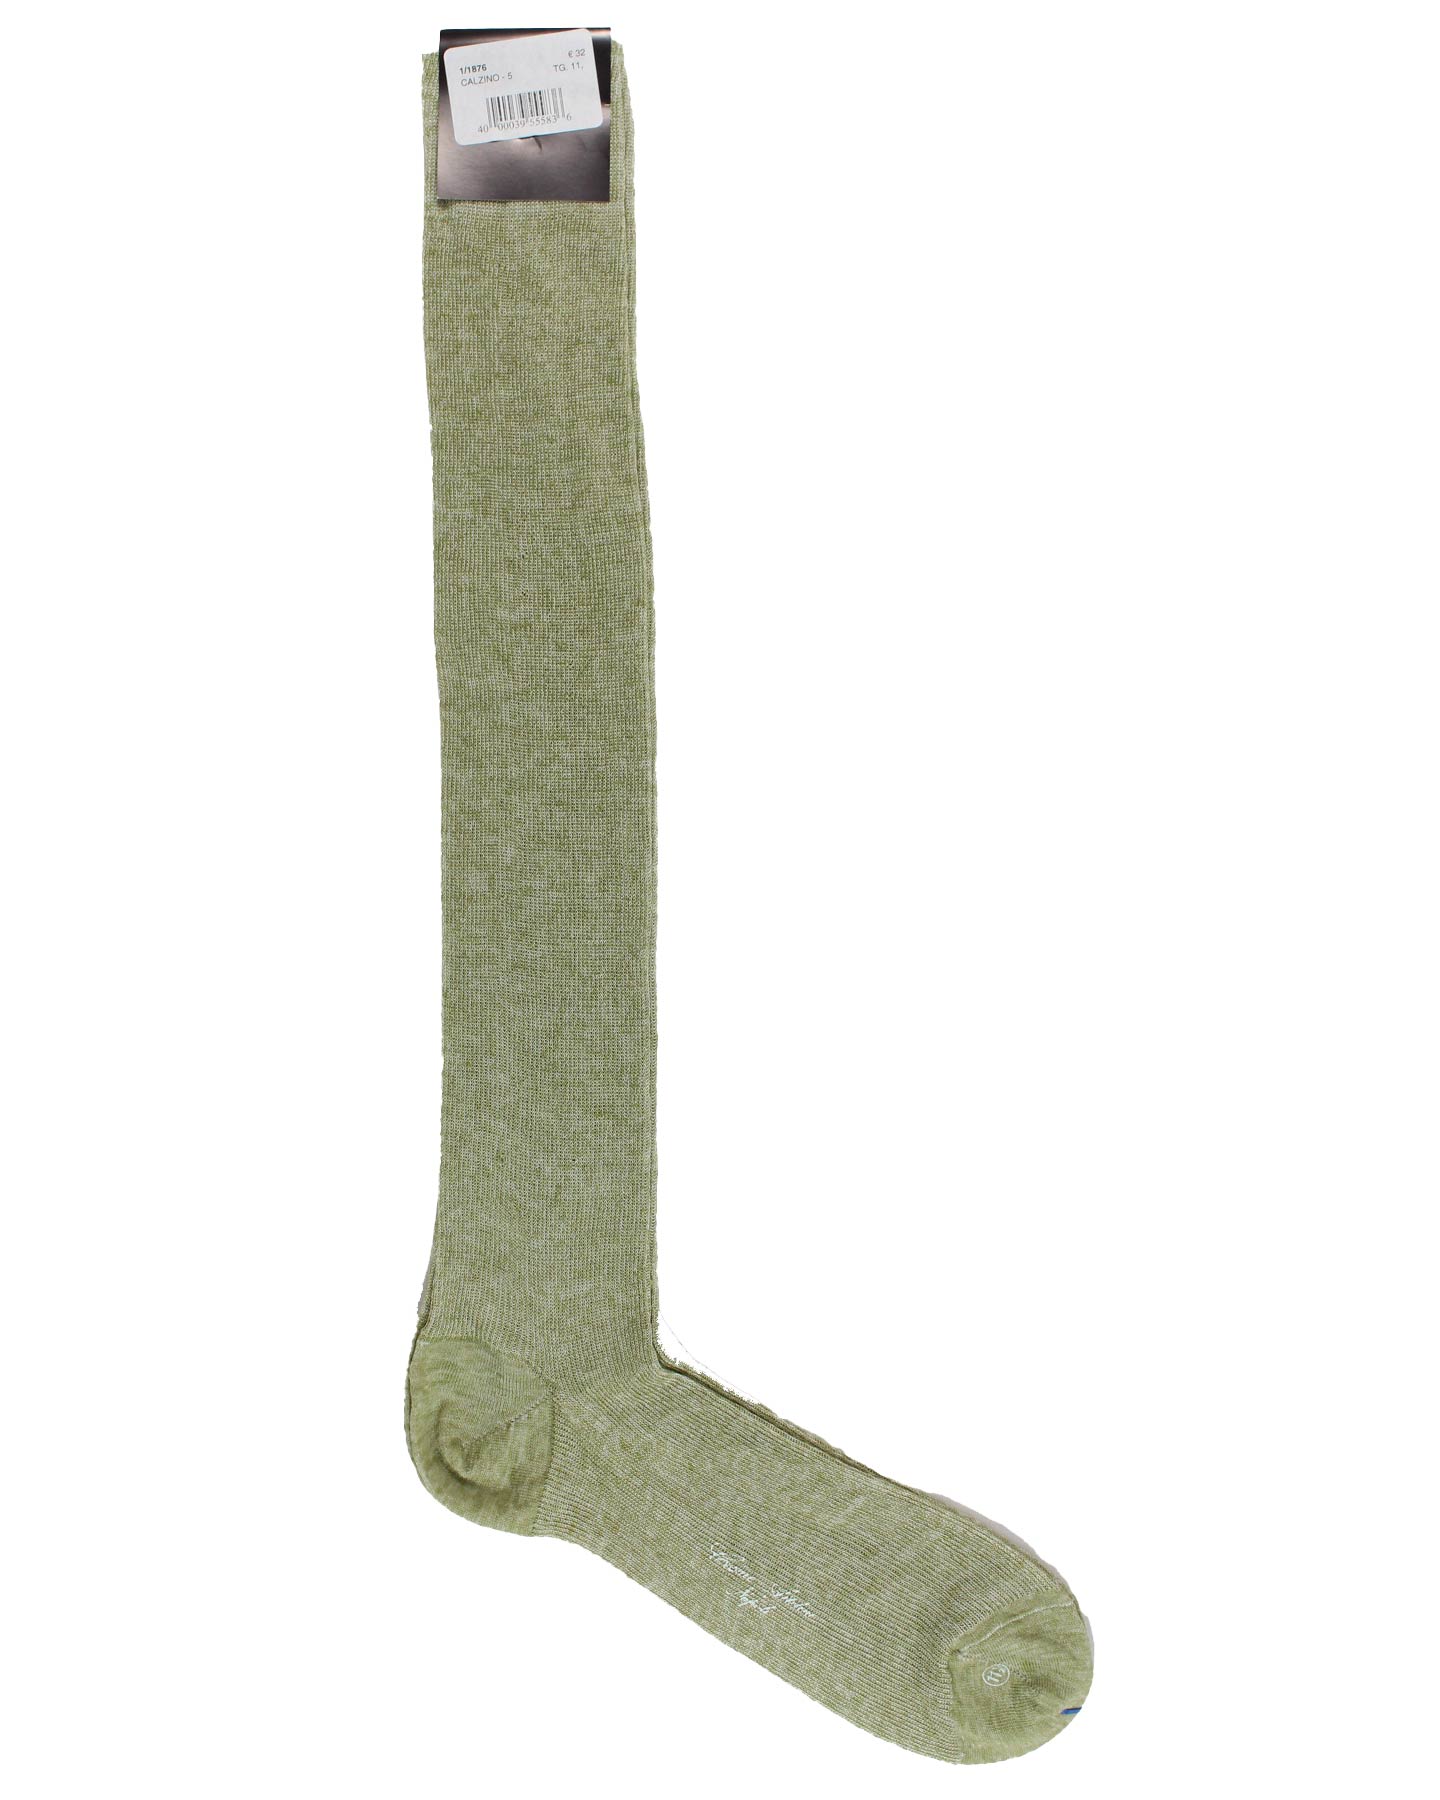 Cesare Attolini Light Green Over The Calf Socks Linen Cotton US 11 - EUR 44 FINAL SALE